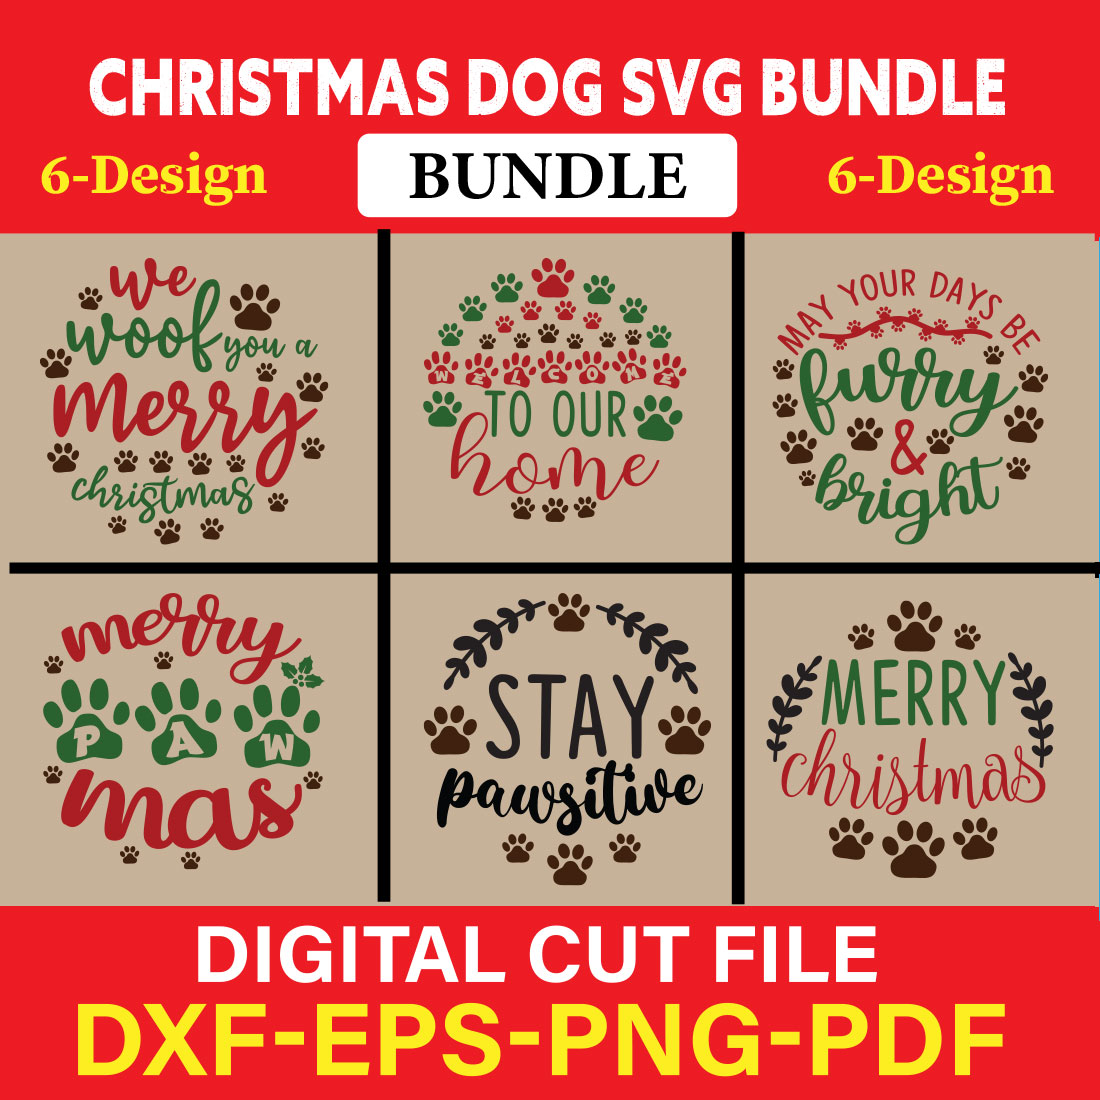 Christmas SVG Bundle / Funny Christmas SVG / Cut File vol-32 cover image.